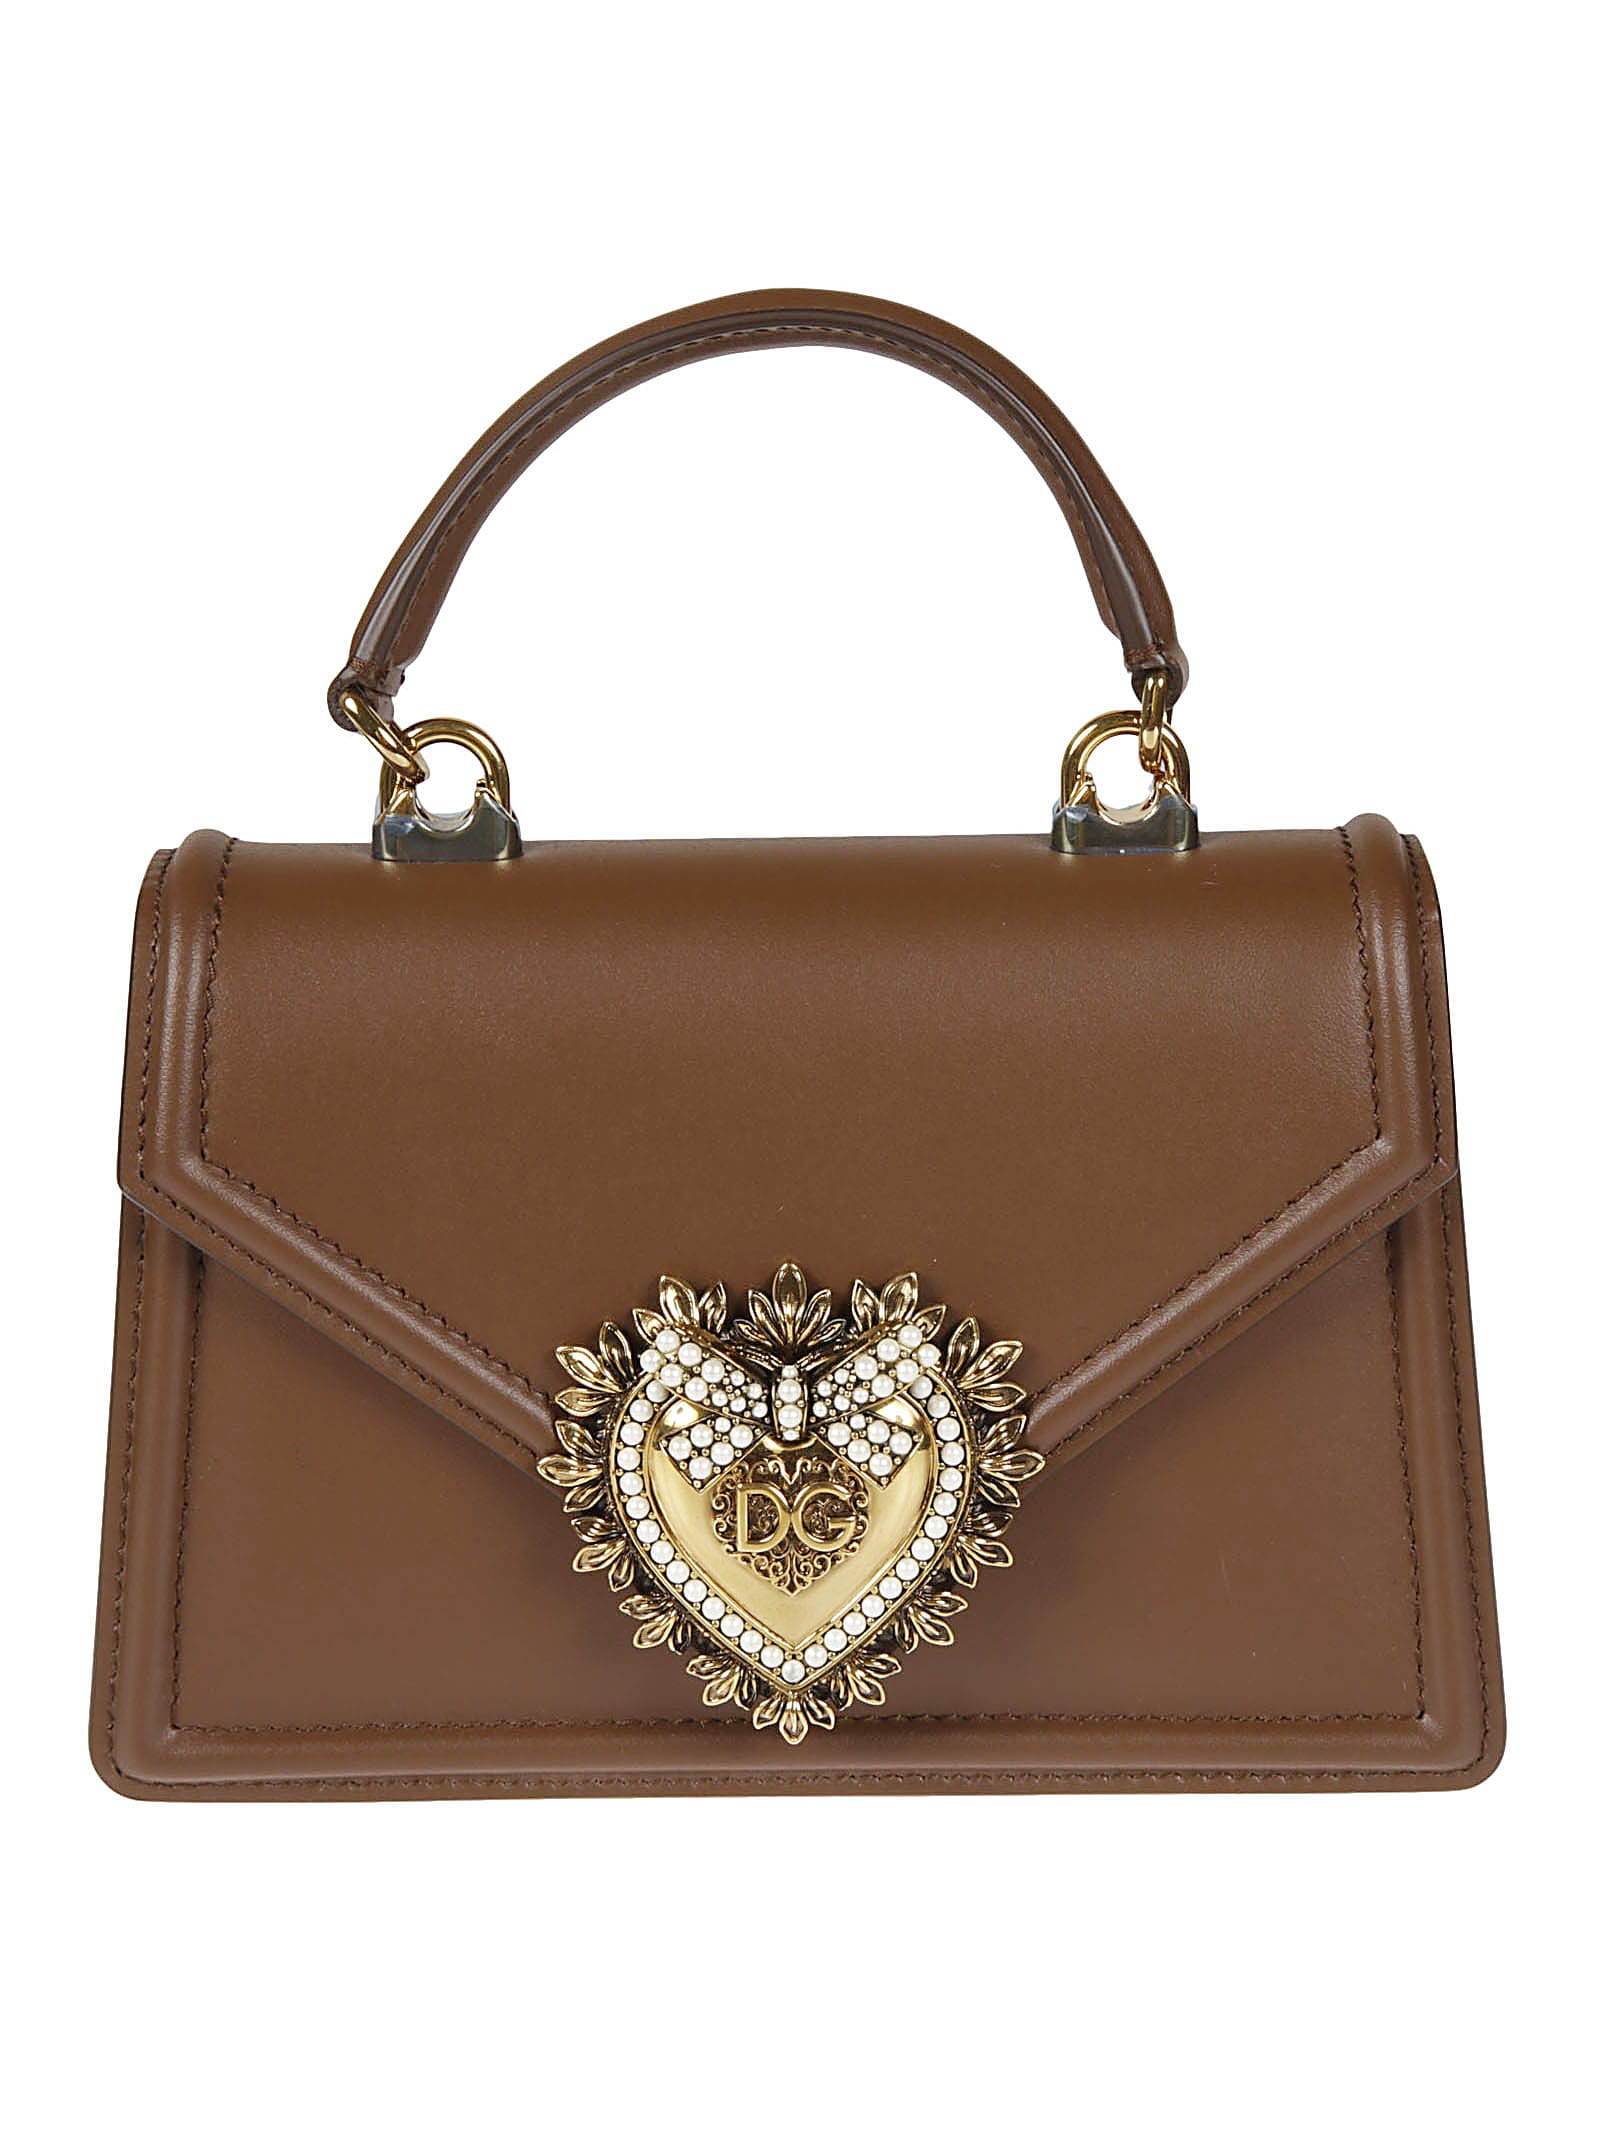 Dolce & Gabbana Embellished Heart Envelope Tote In Brown